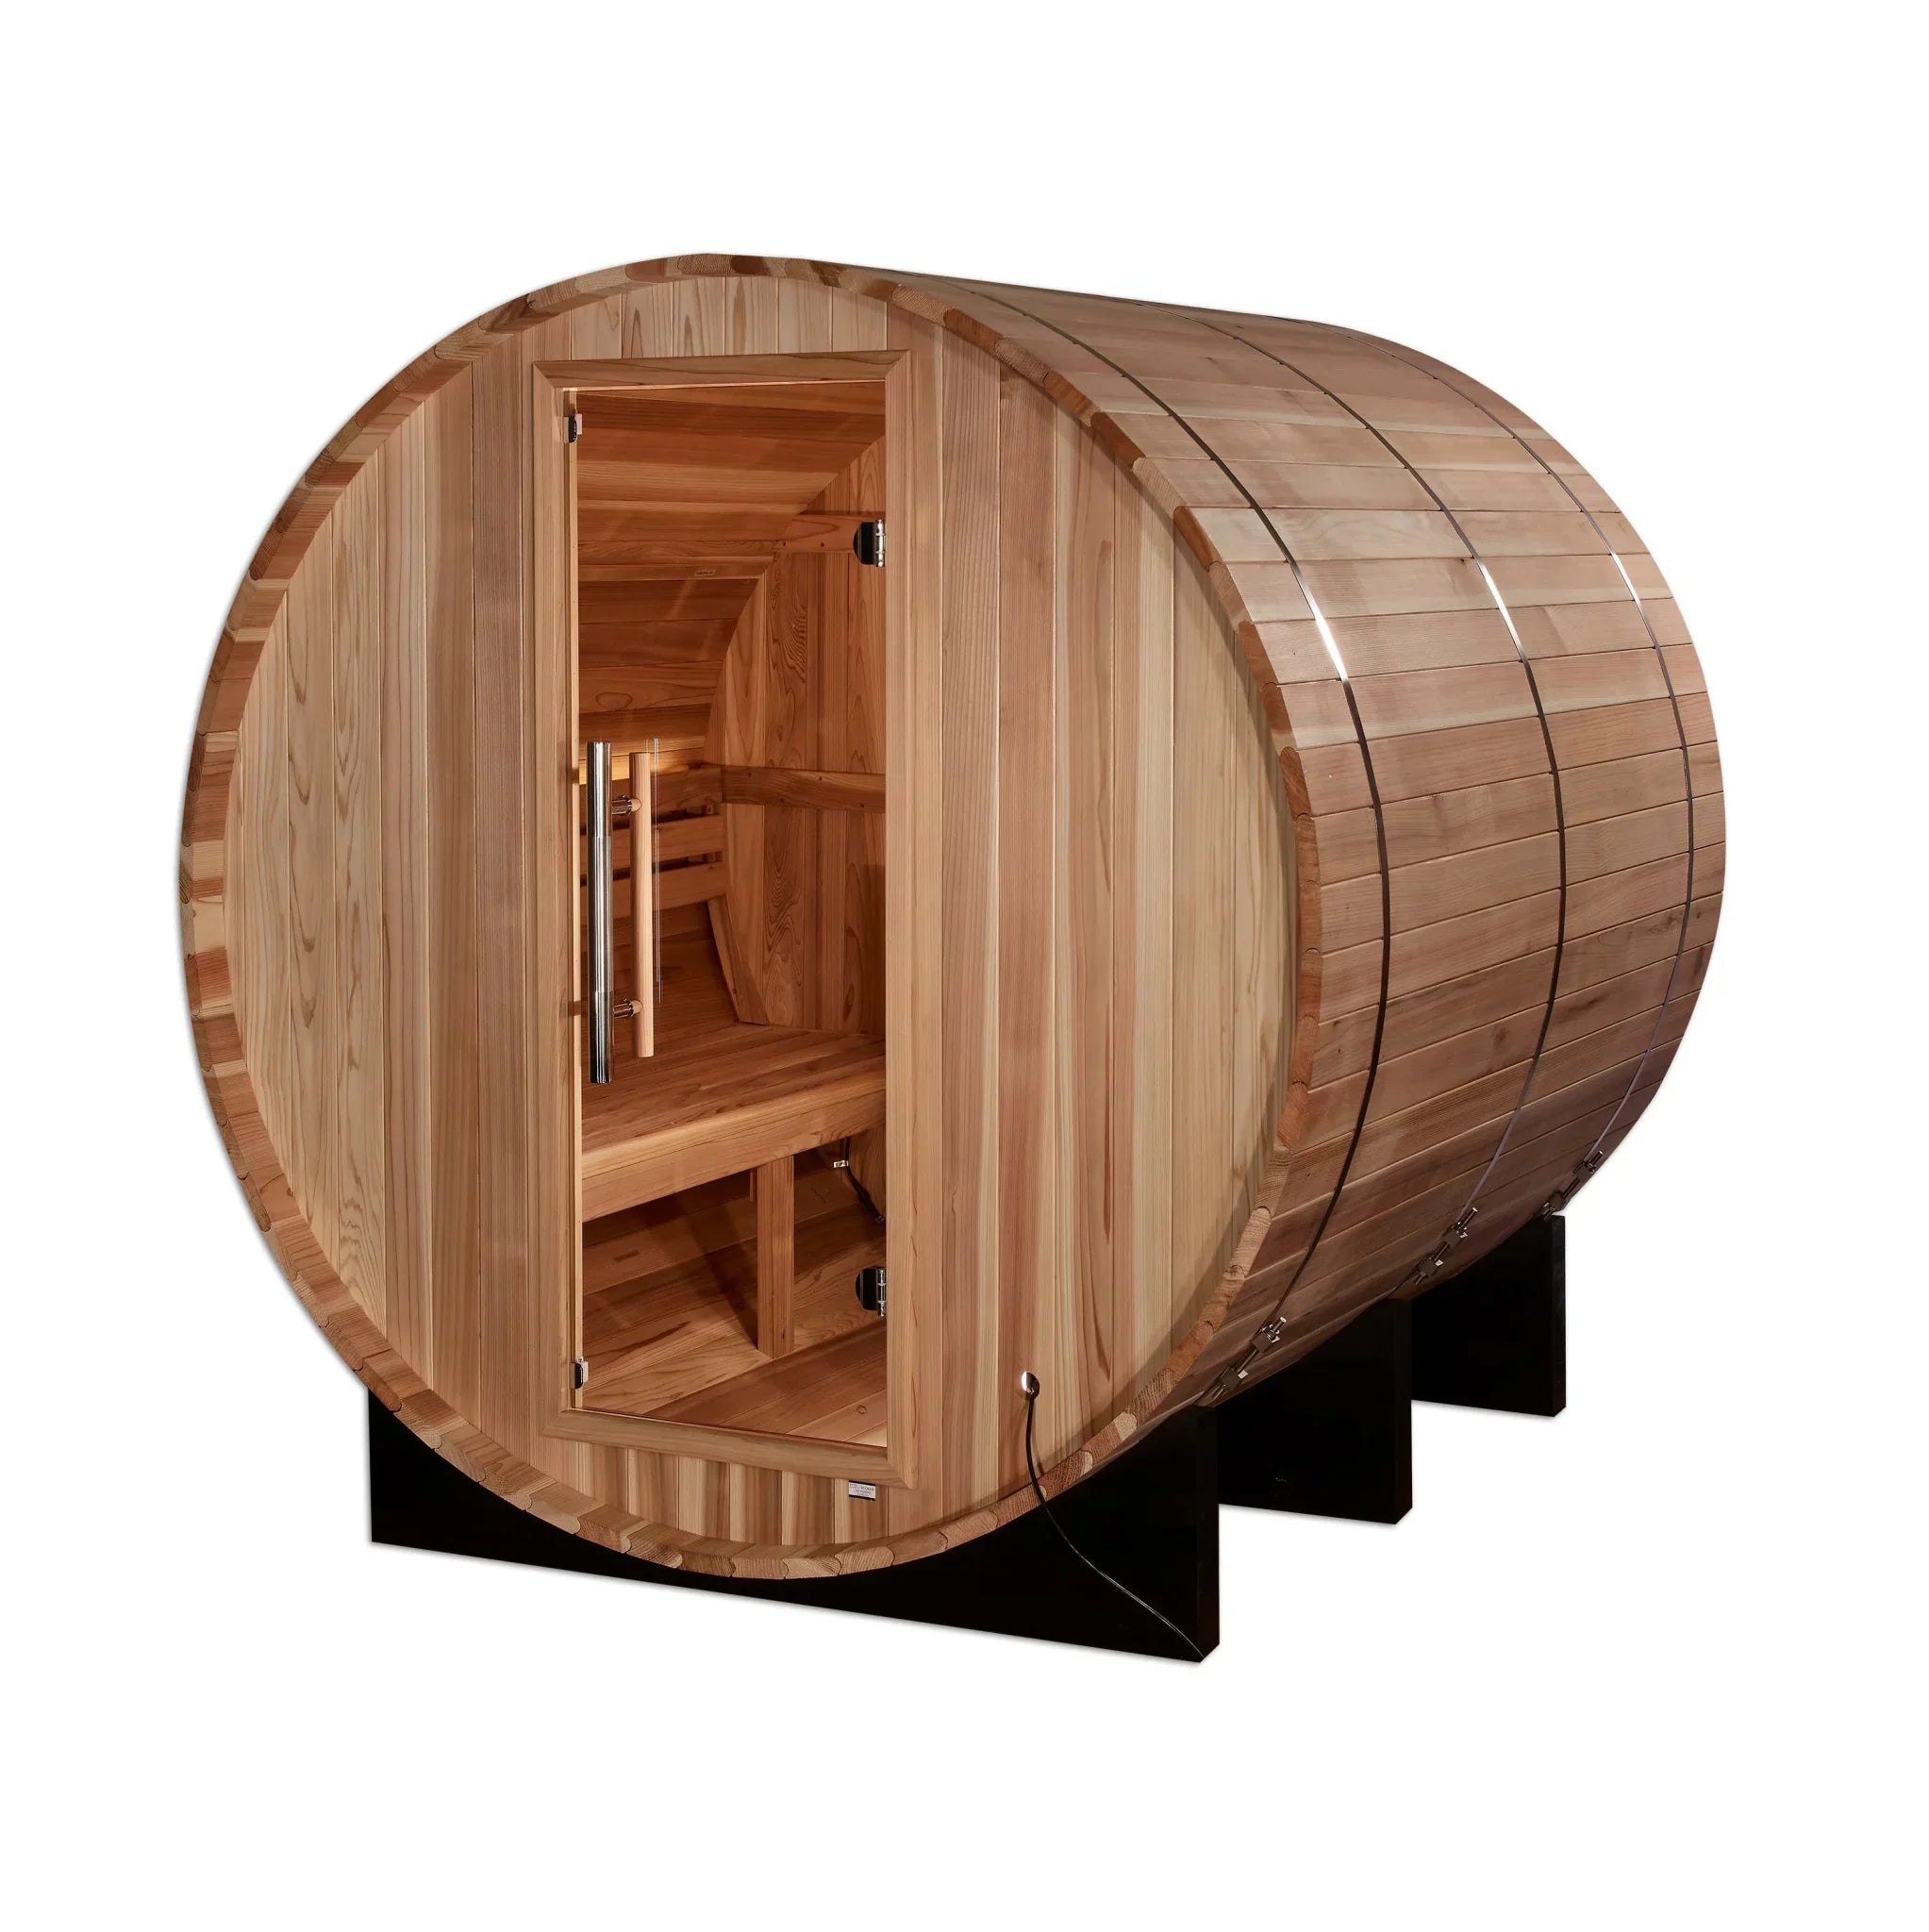 Golden Designs "Arosa" 4 Person Barrel Traditional Sauna - Pacific Cedar - Lotus Massage Chairs